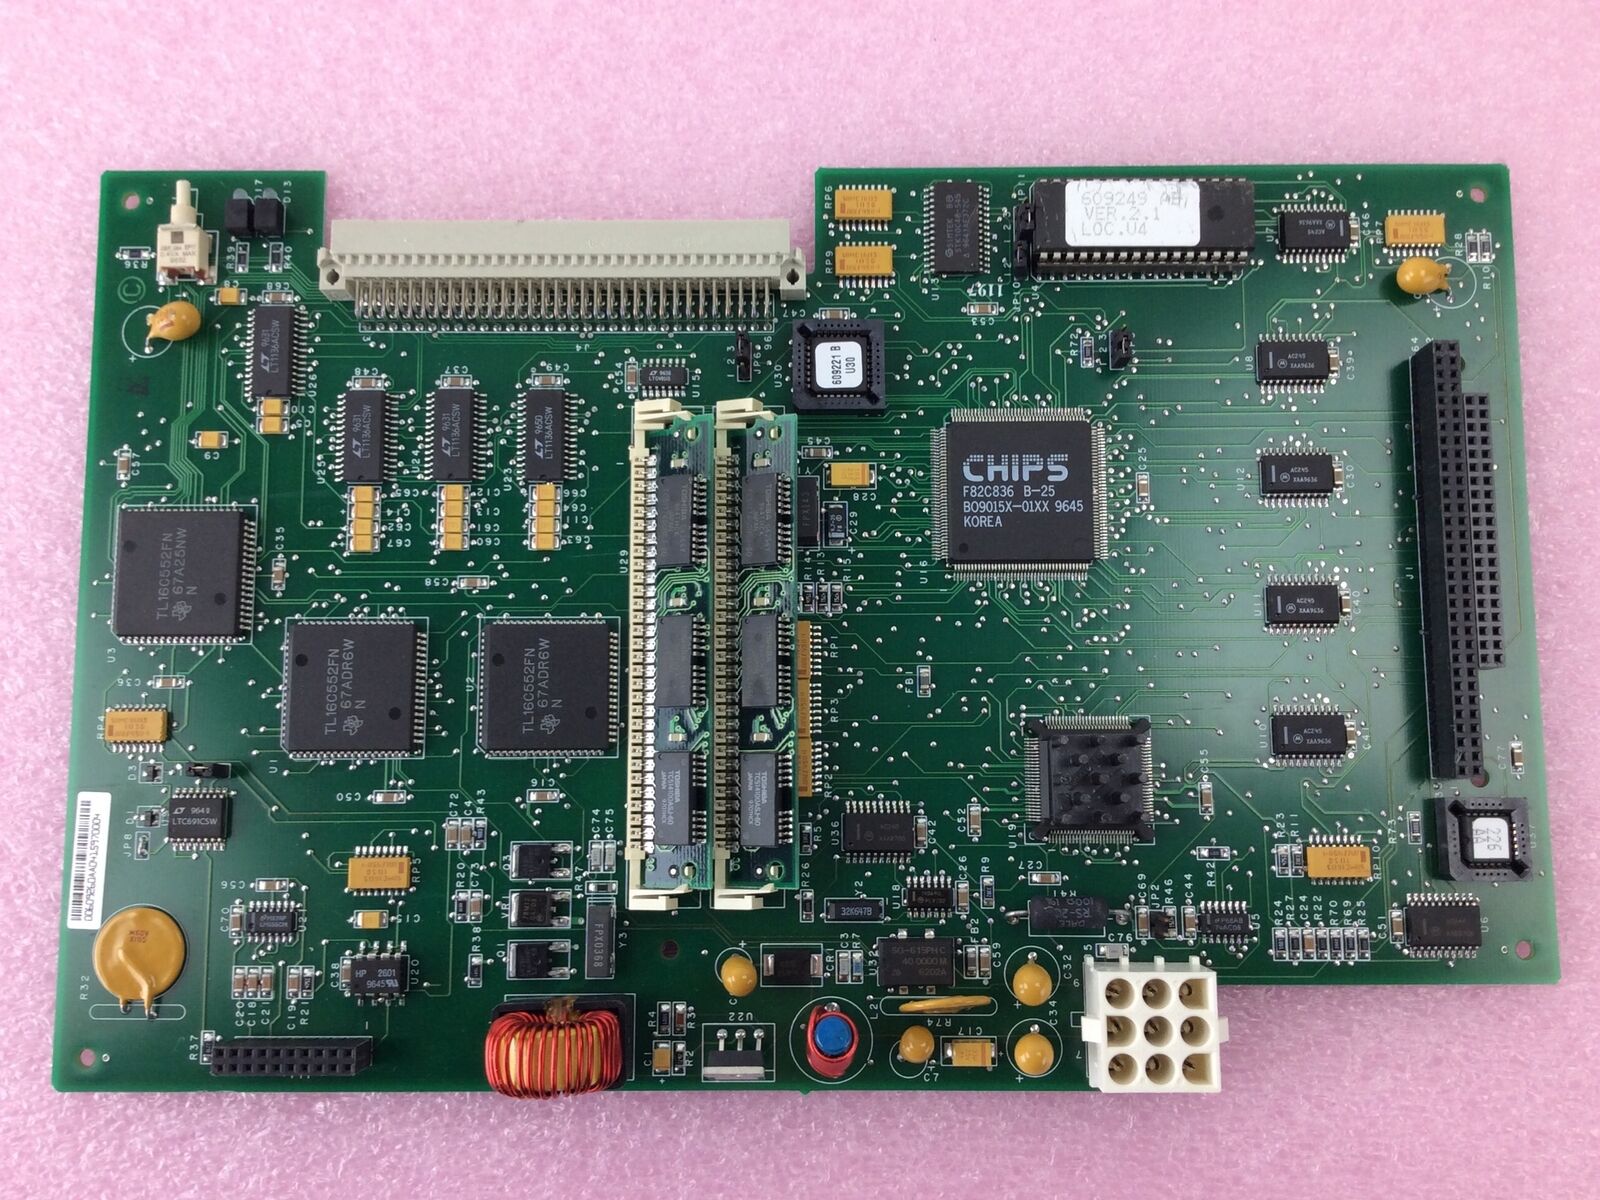 Circuit Board - Chips B0915X-01XX 9645 F82C836 - 609260 - REV AA - Untested